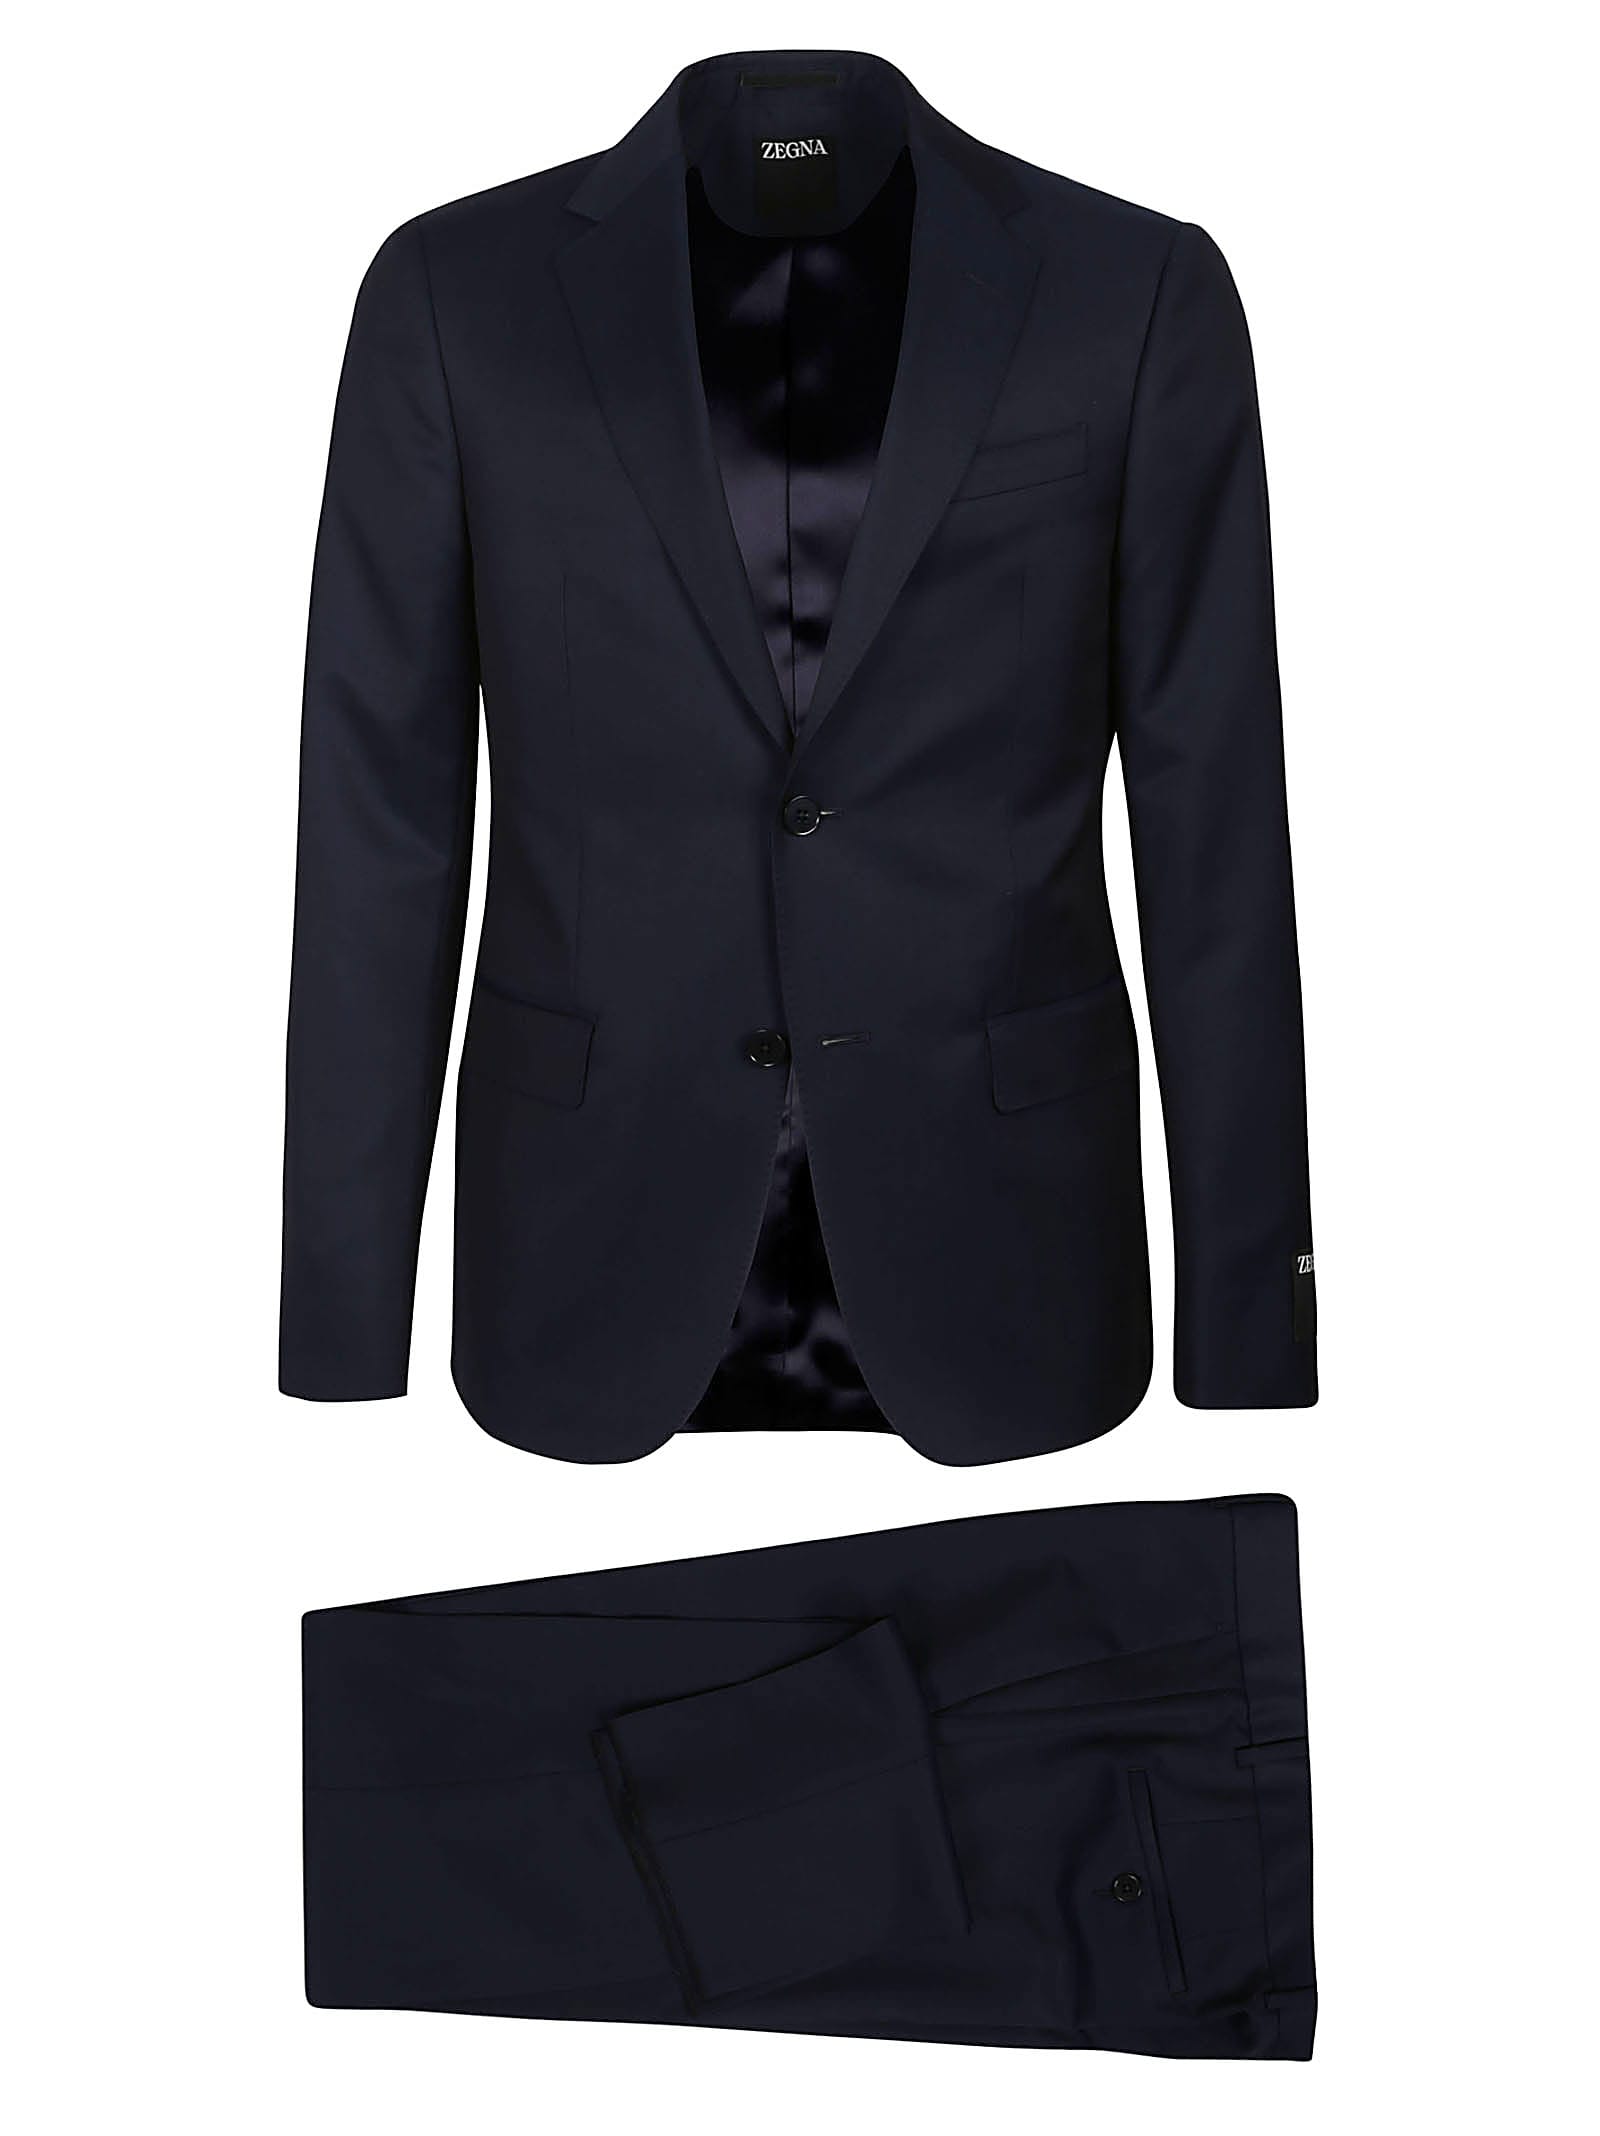 Luxx Tailoring Suit